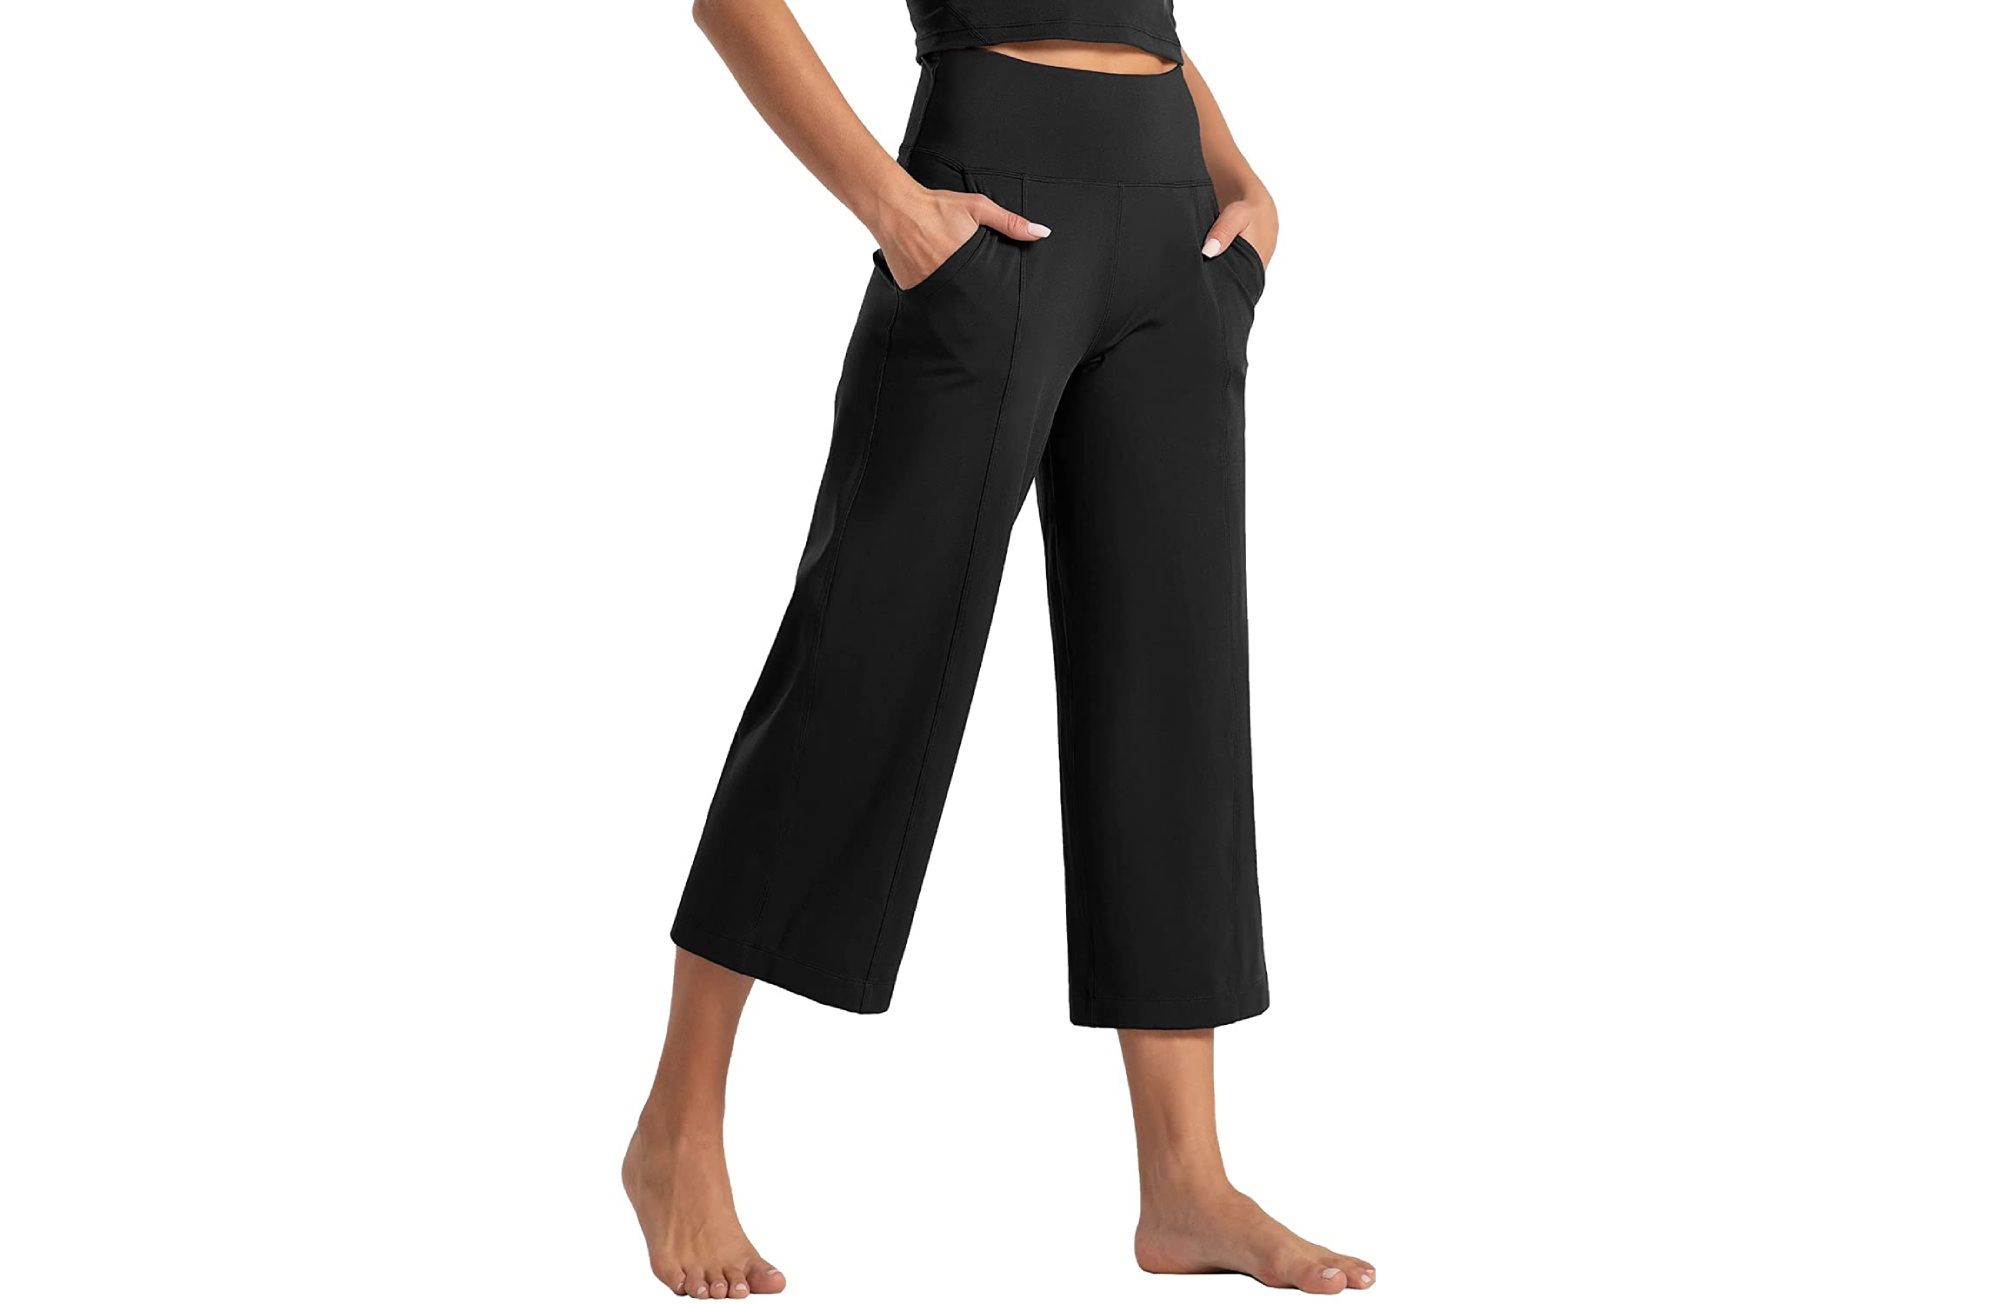 https://www.usmagazine.com/wp-content/uploads/2022/08/tmustobe-cropped-yoga-pants.jpg?quality=86&strip=all